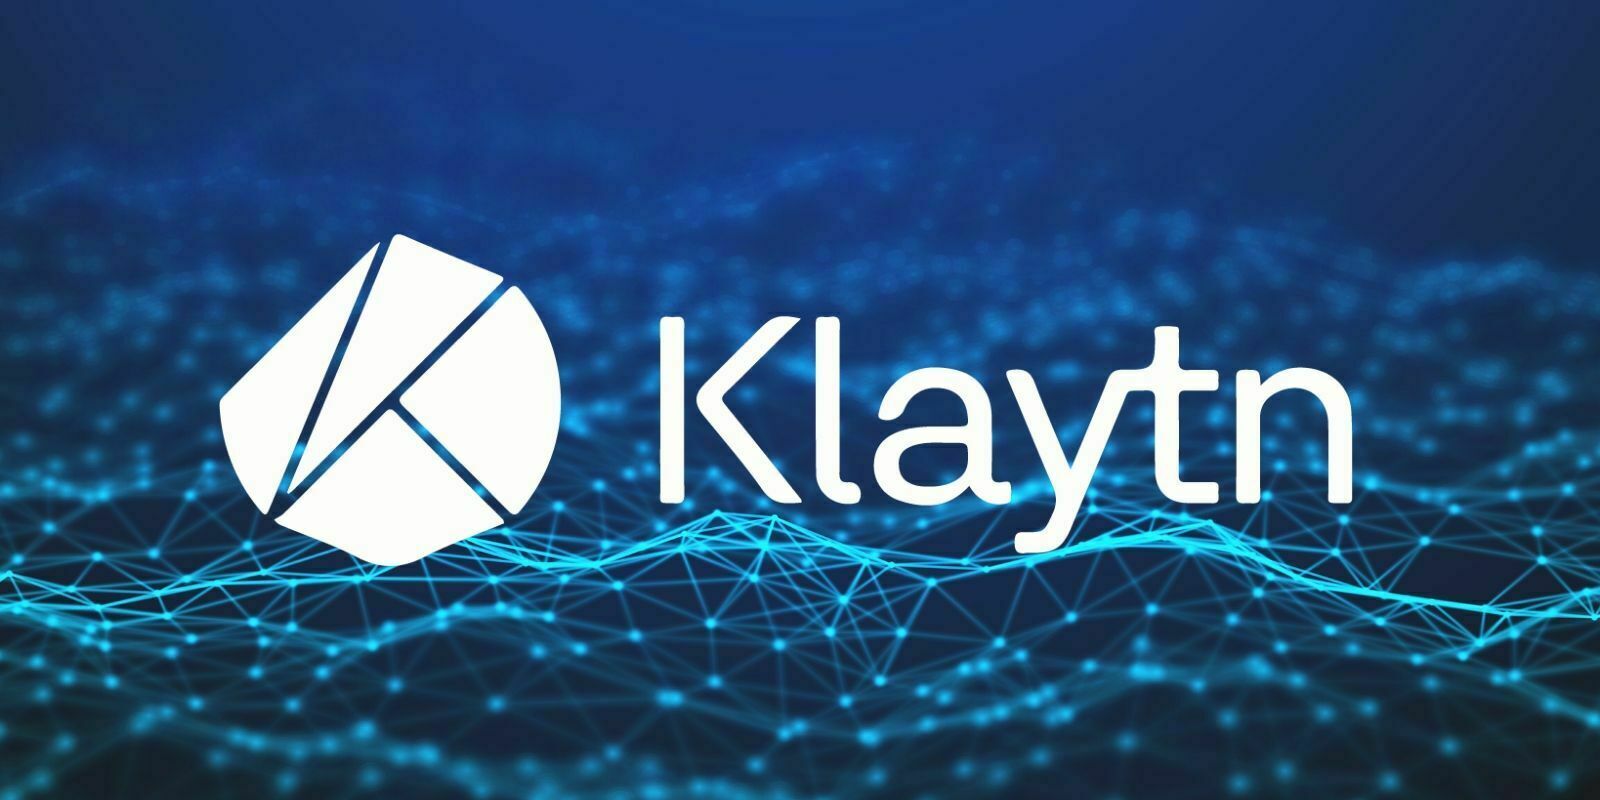 CEO de Kakao : “Klaytn devance Facebook et la Libra”